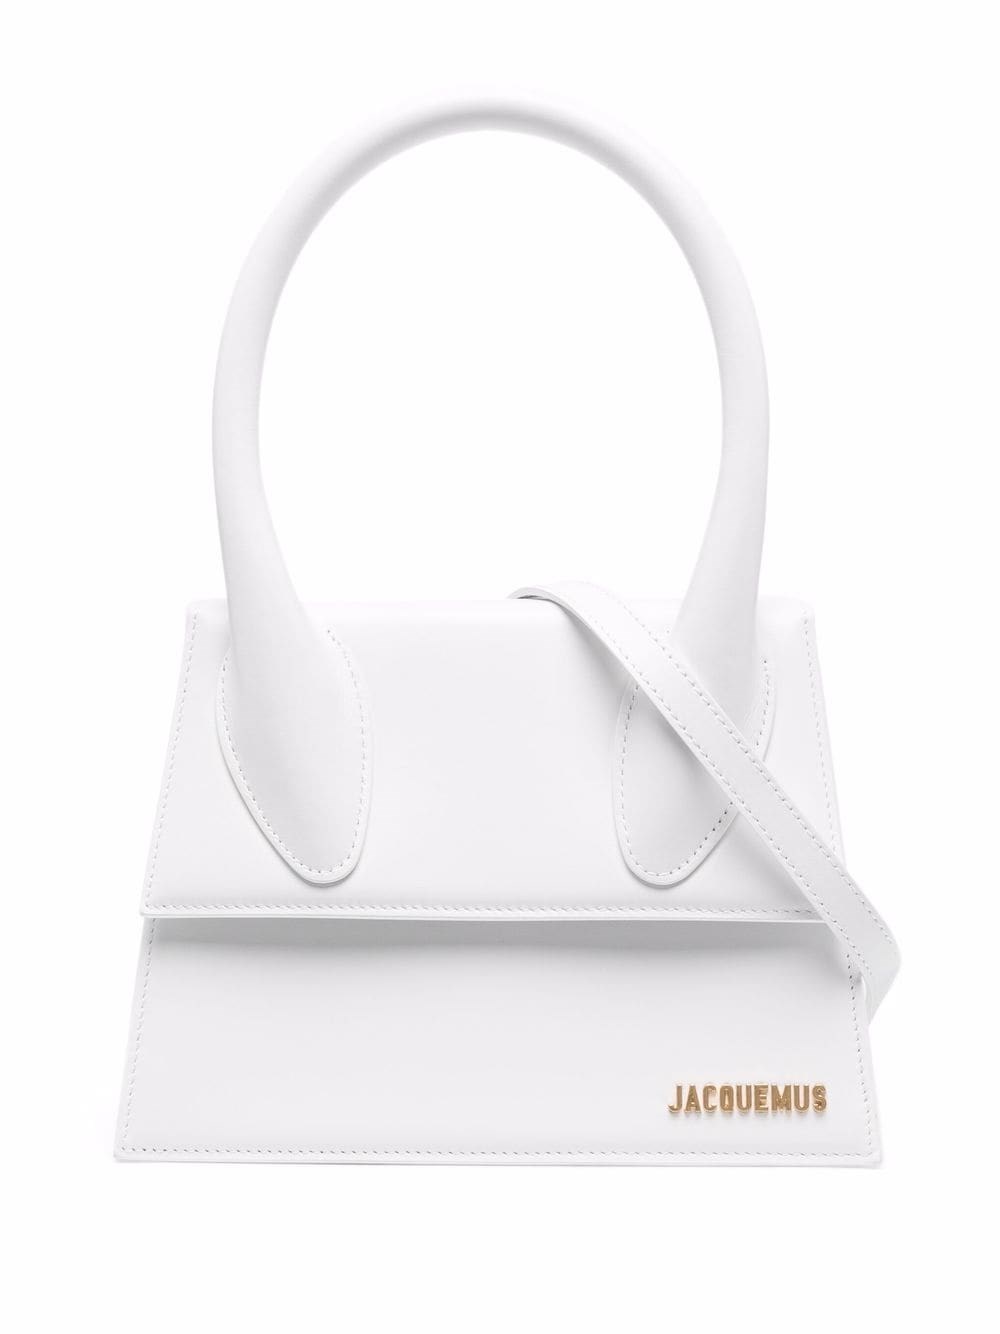 Jacquemus Le Grand Chiquito Tote Bag In White